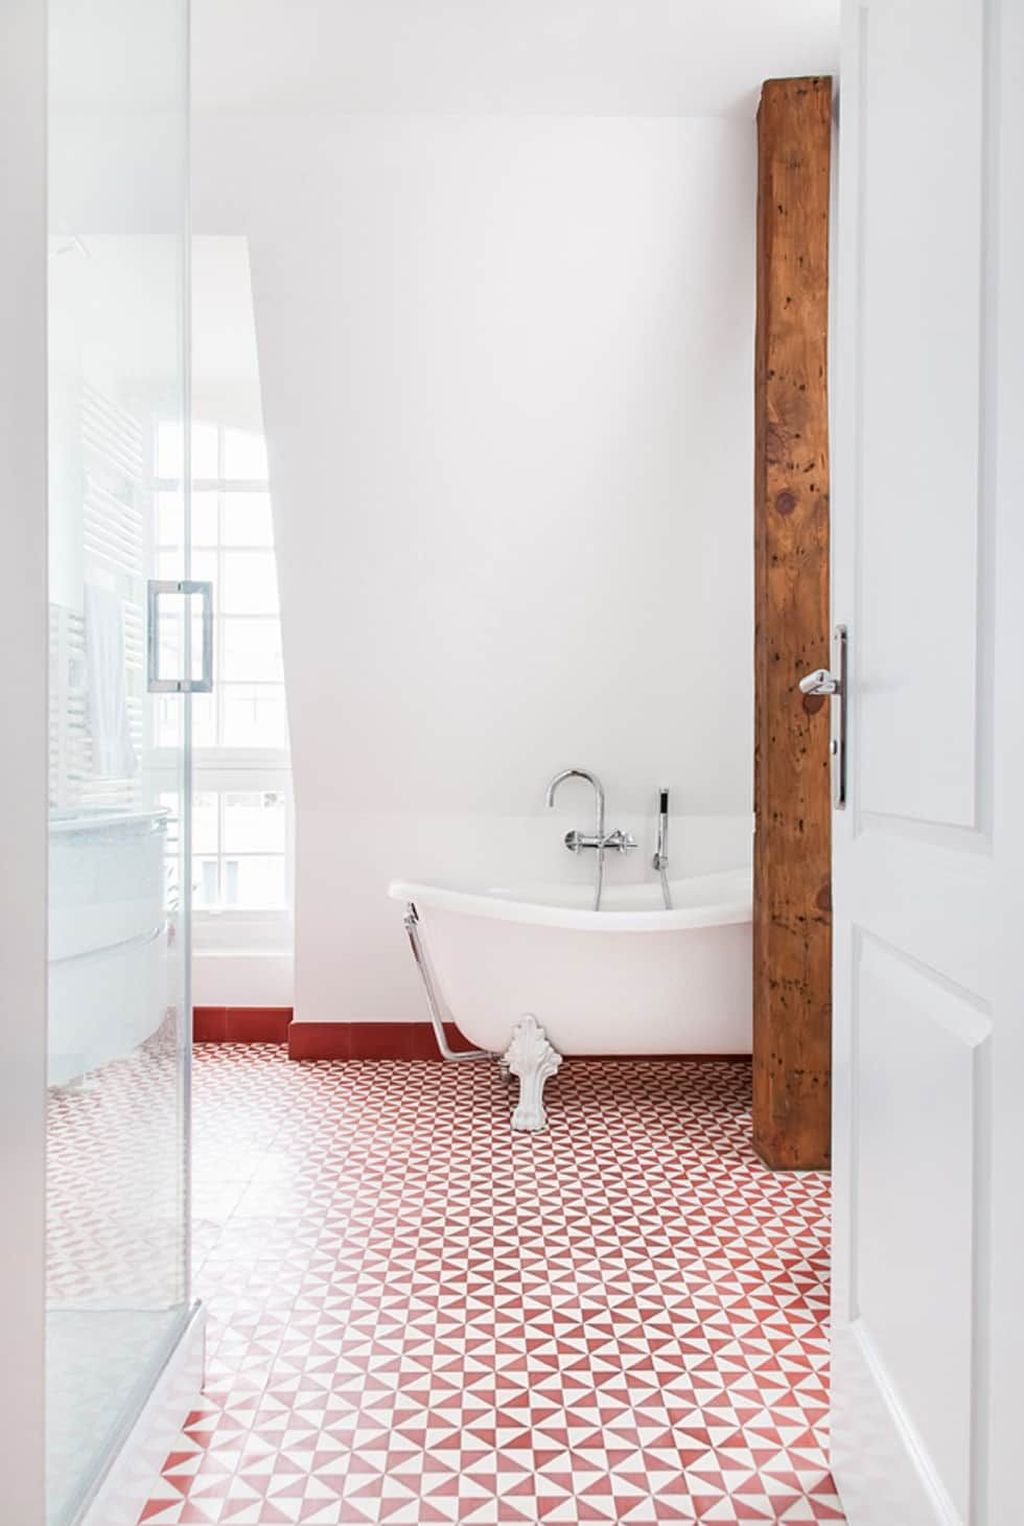 The Best Bathroom Floor Motif Ideas Ready To Amaze You06